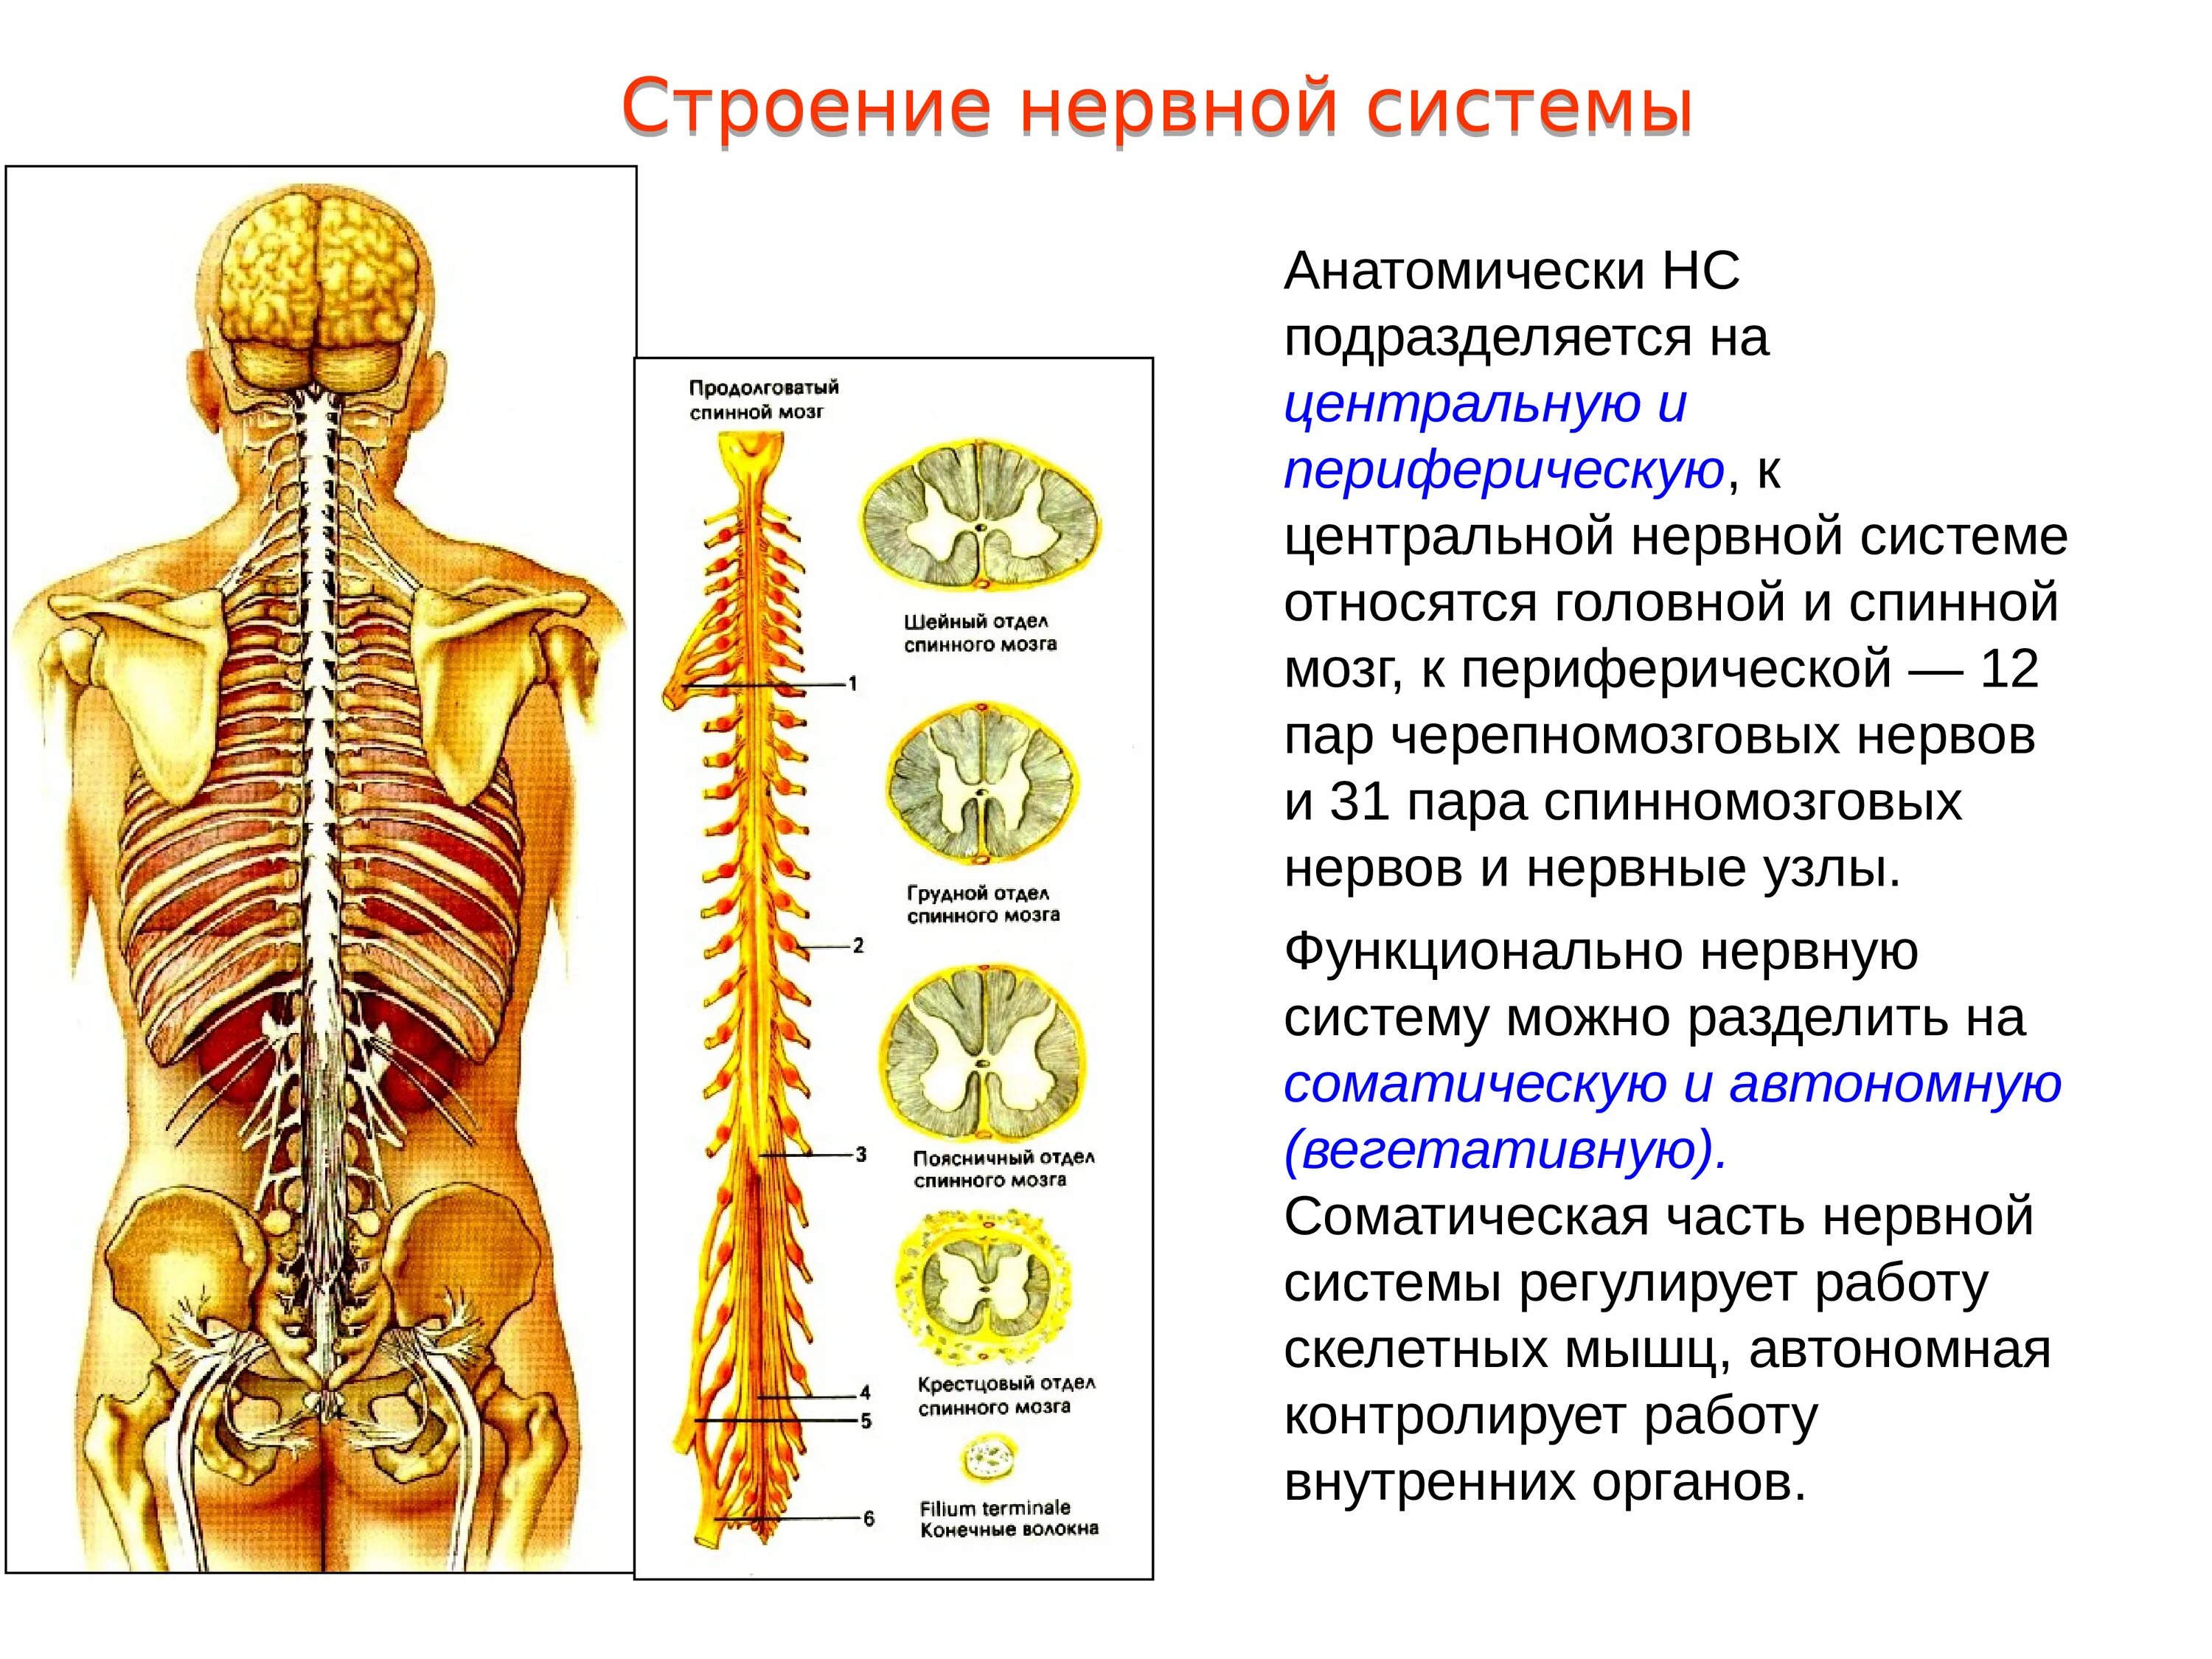 Центральная нервная система анатомия. Нервная система спинной мозг кратко анатомия. Строение нервной системы нервная система ЦНС периферическая. К ЦНС относятся органы нервной системы. Центральная нервная система строение и функции спинного мозга.